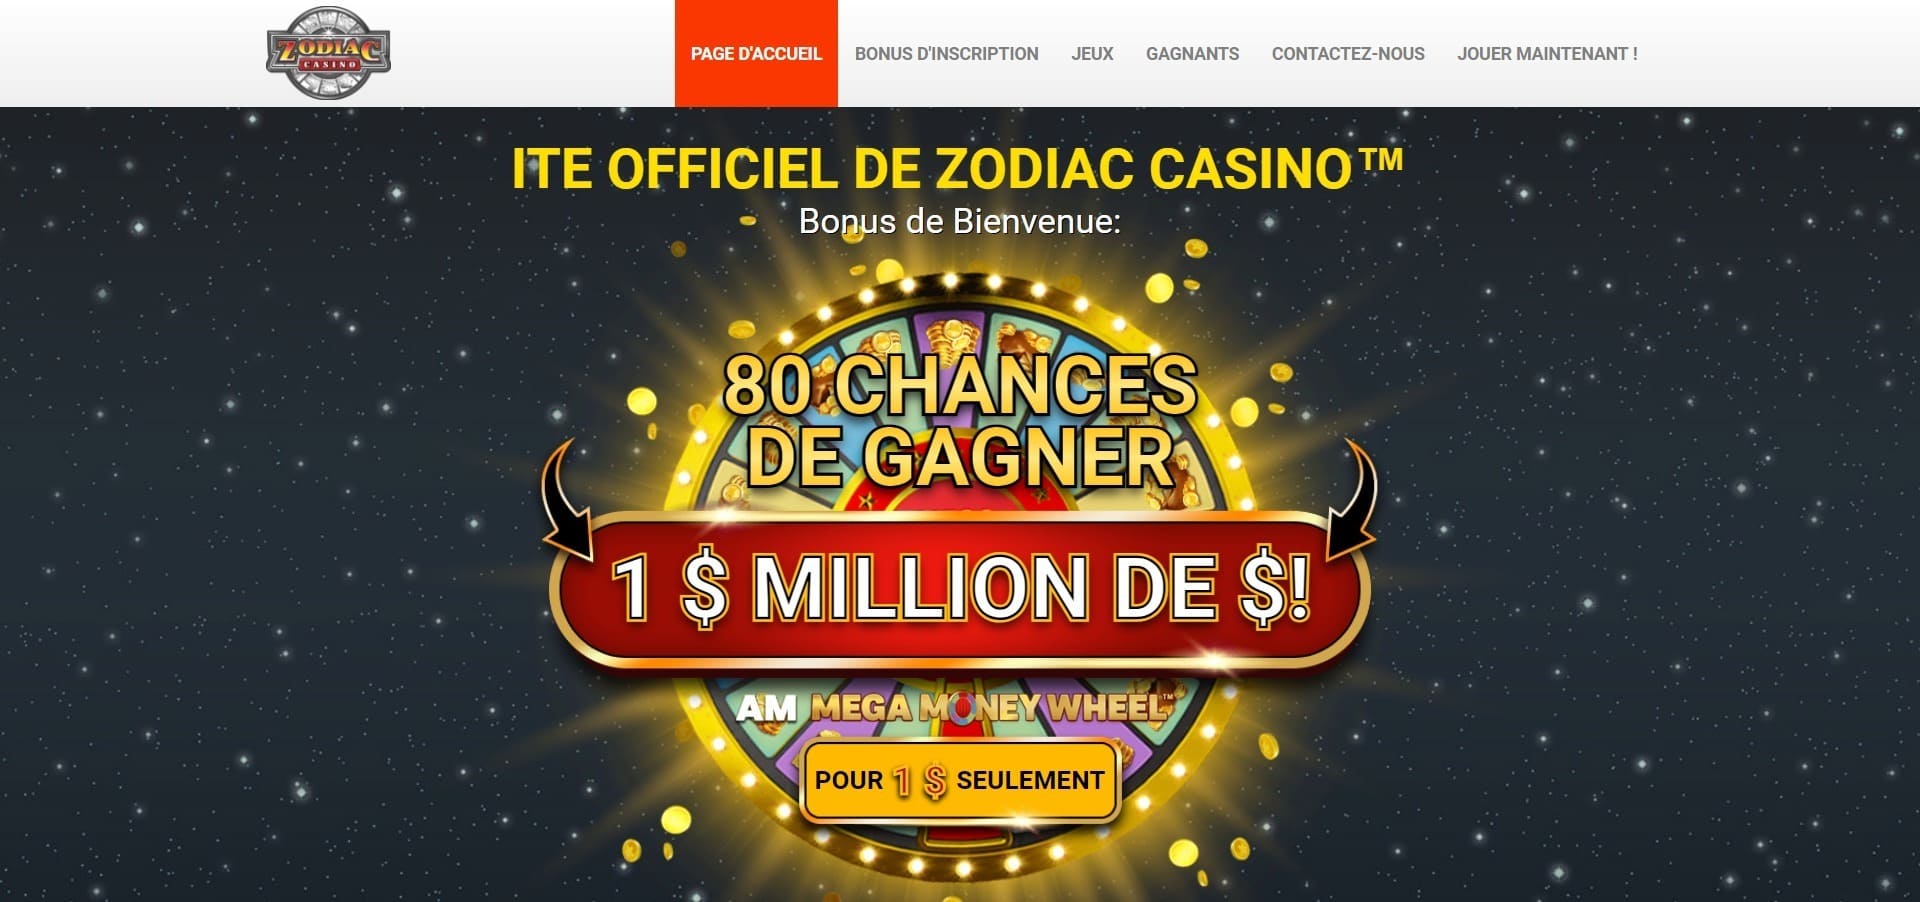 Site officiel de Zodiac Casino